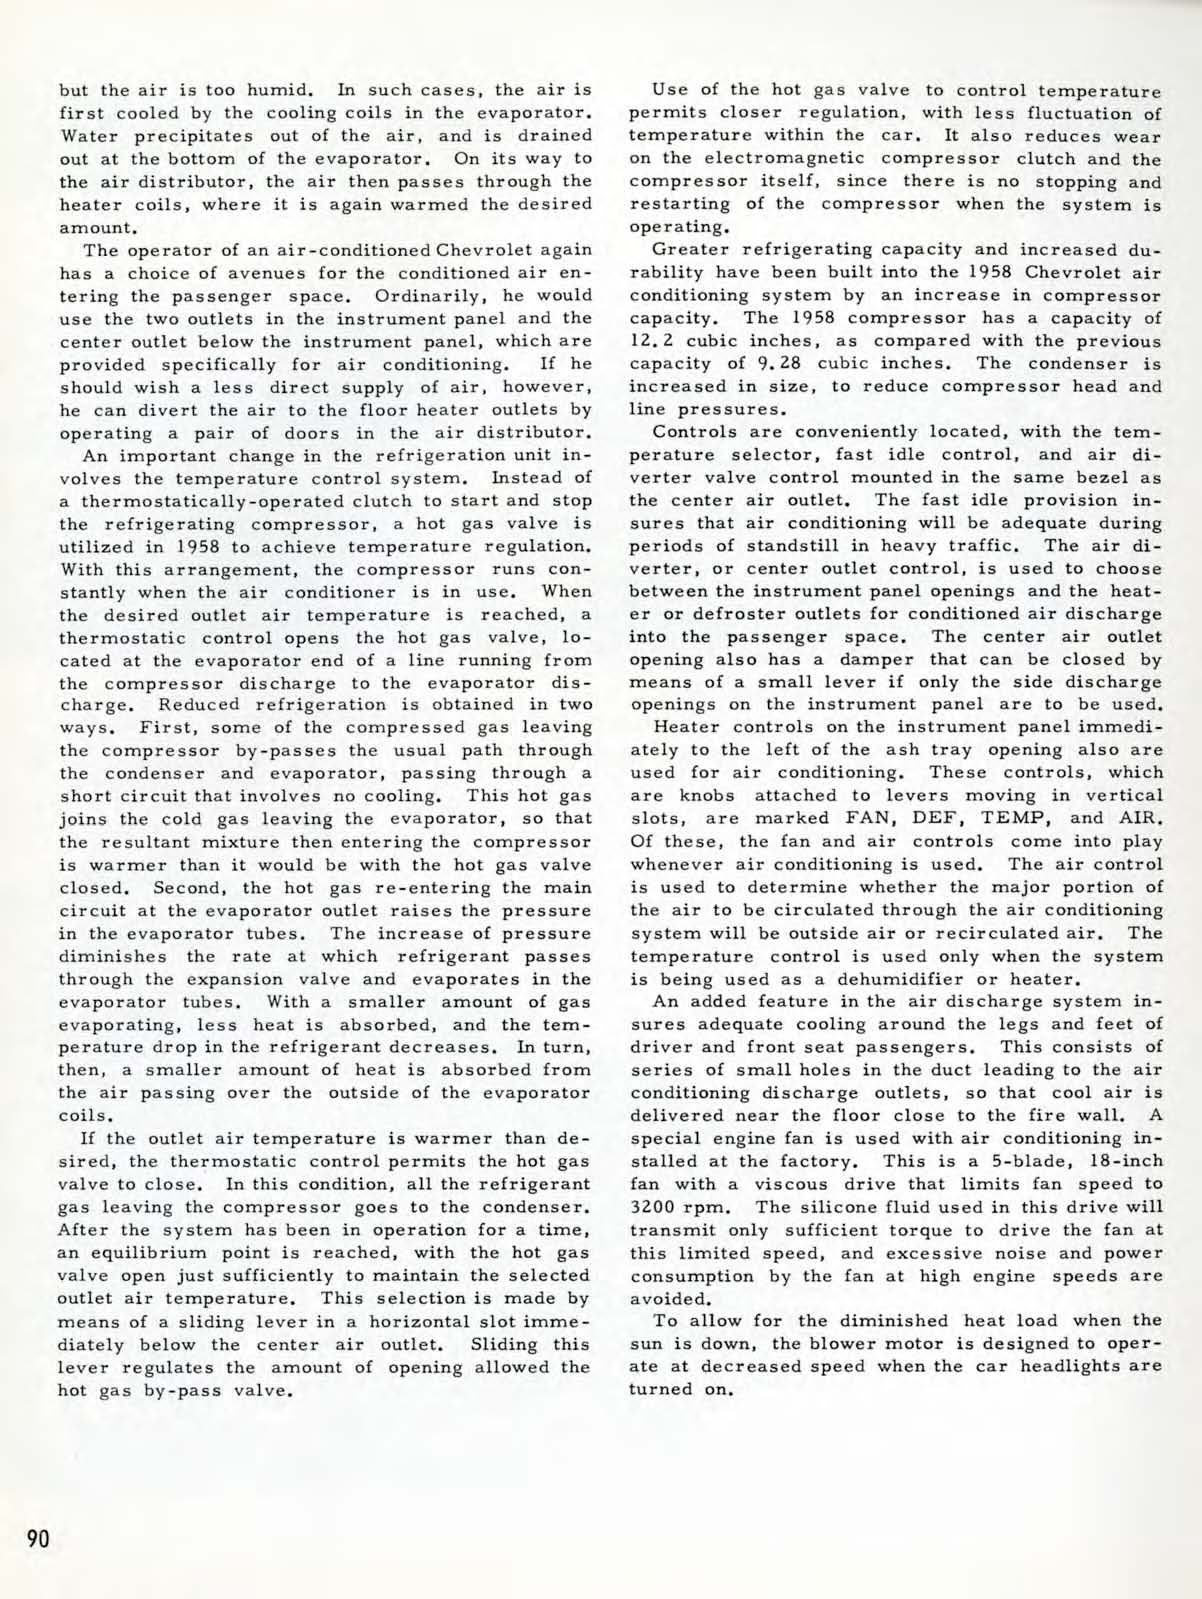 1958_Chevrolet_Engineering_Features-090